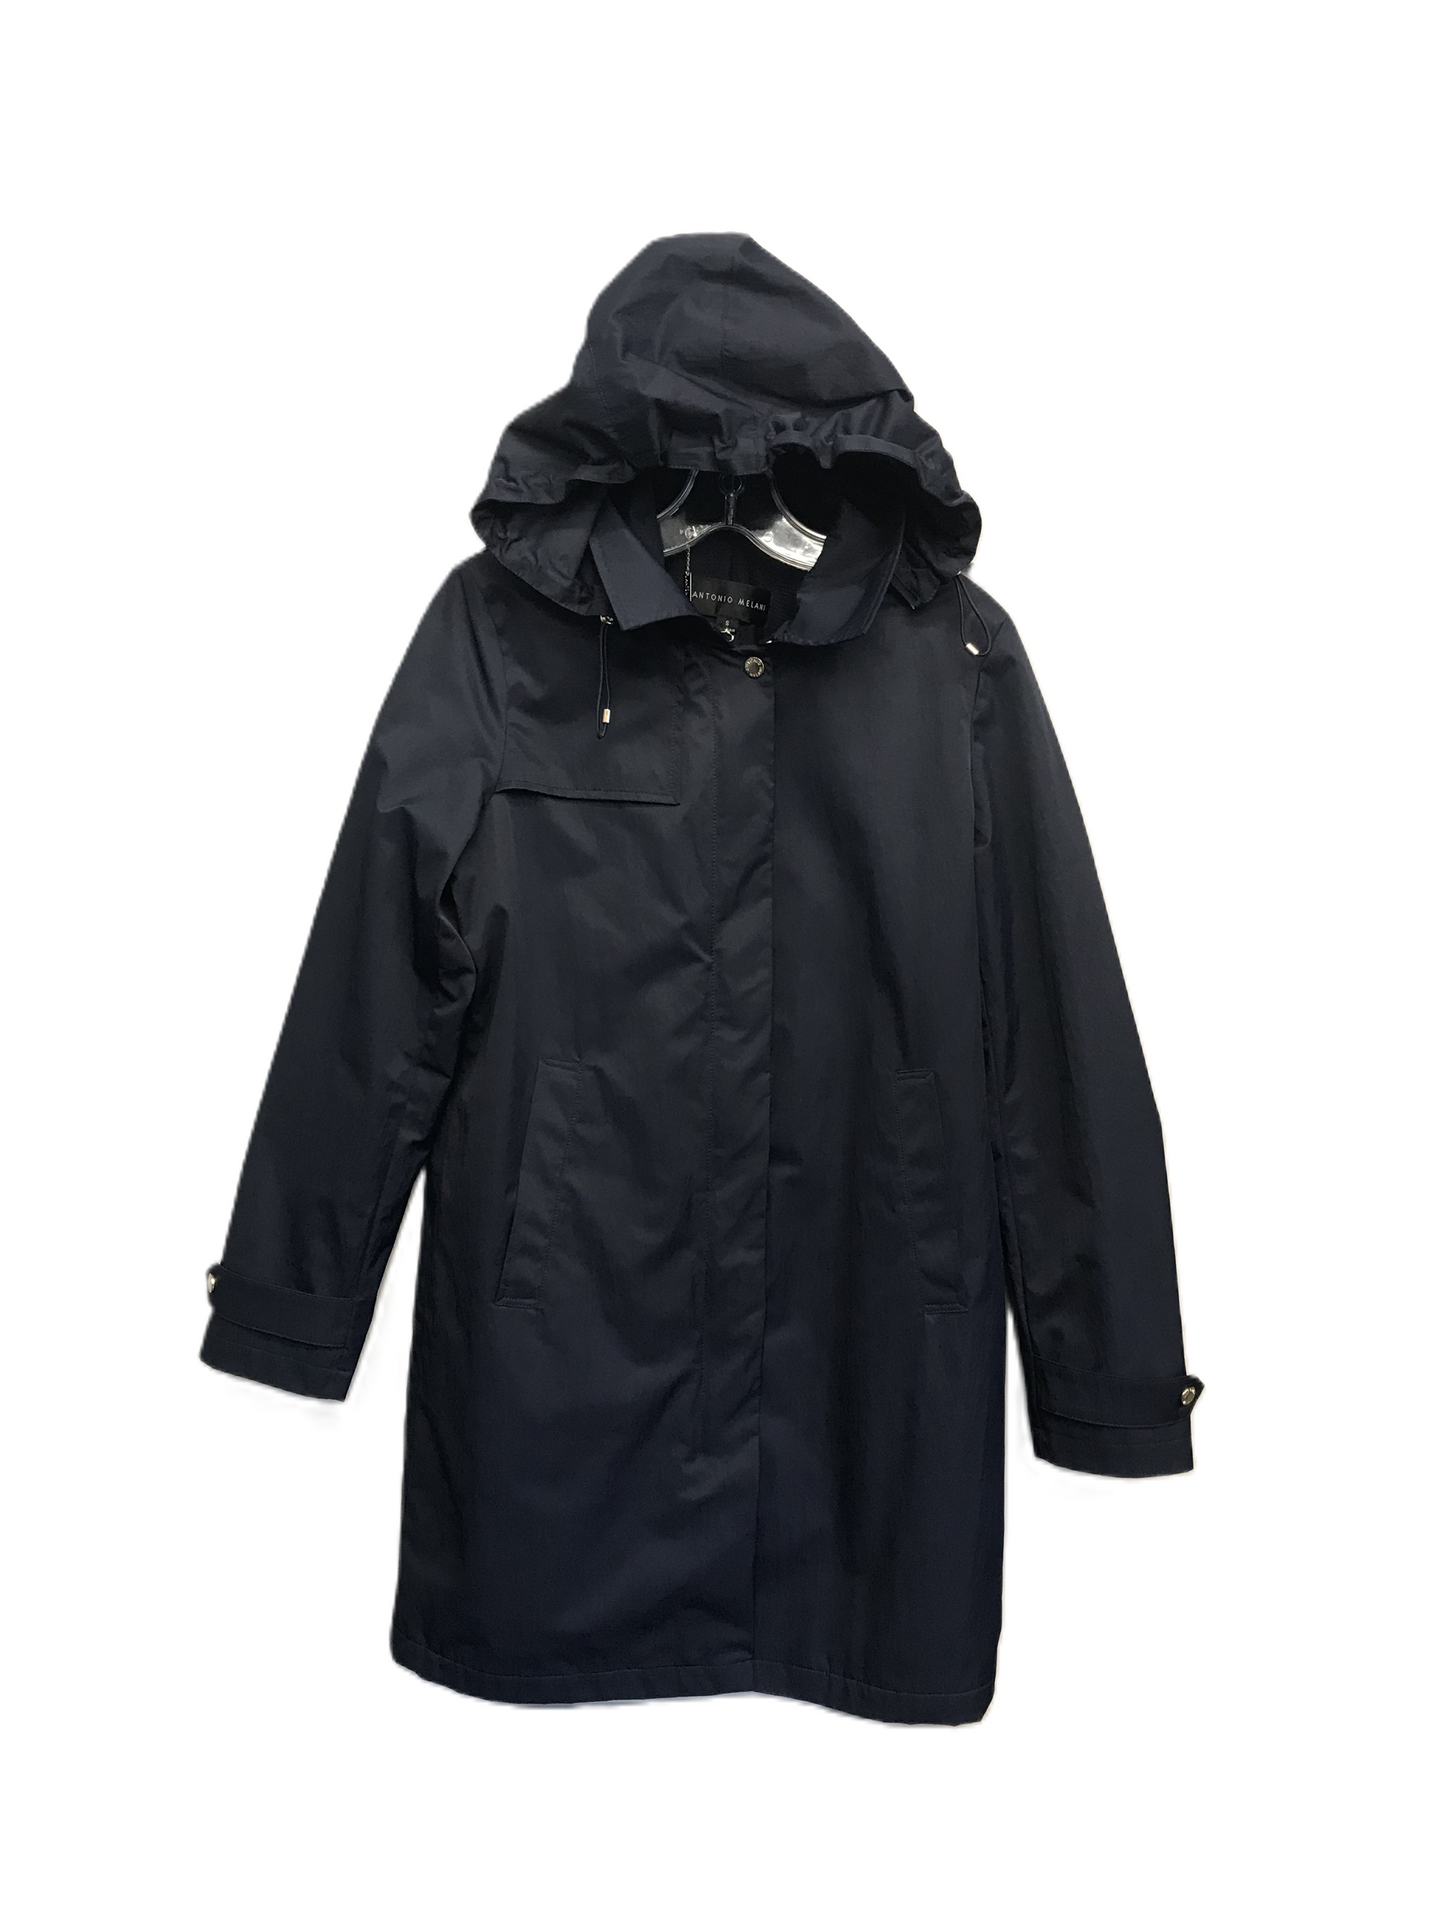 Navy Coat Raincoat By Antonio Melani, Size: S